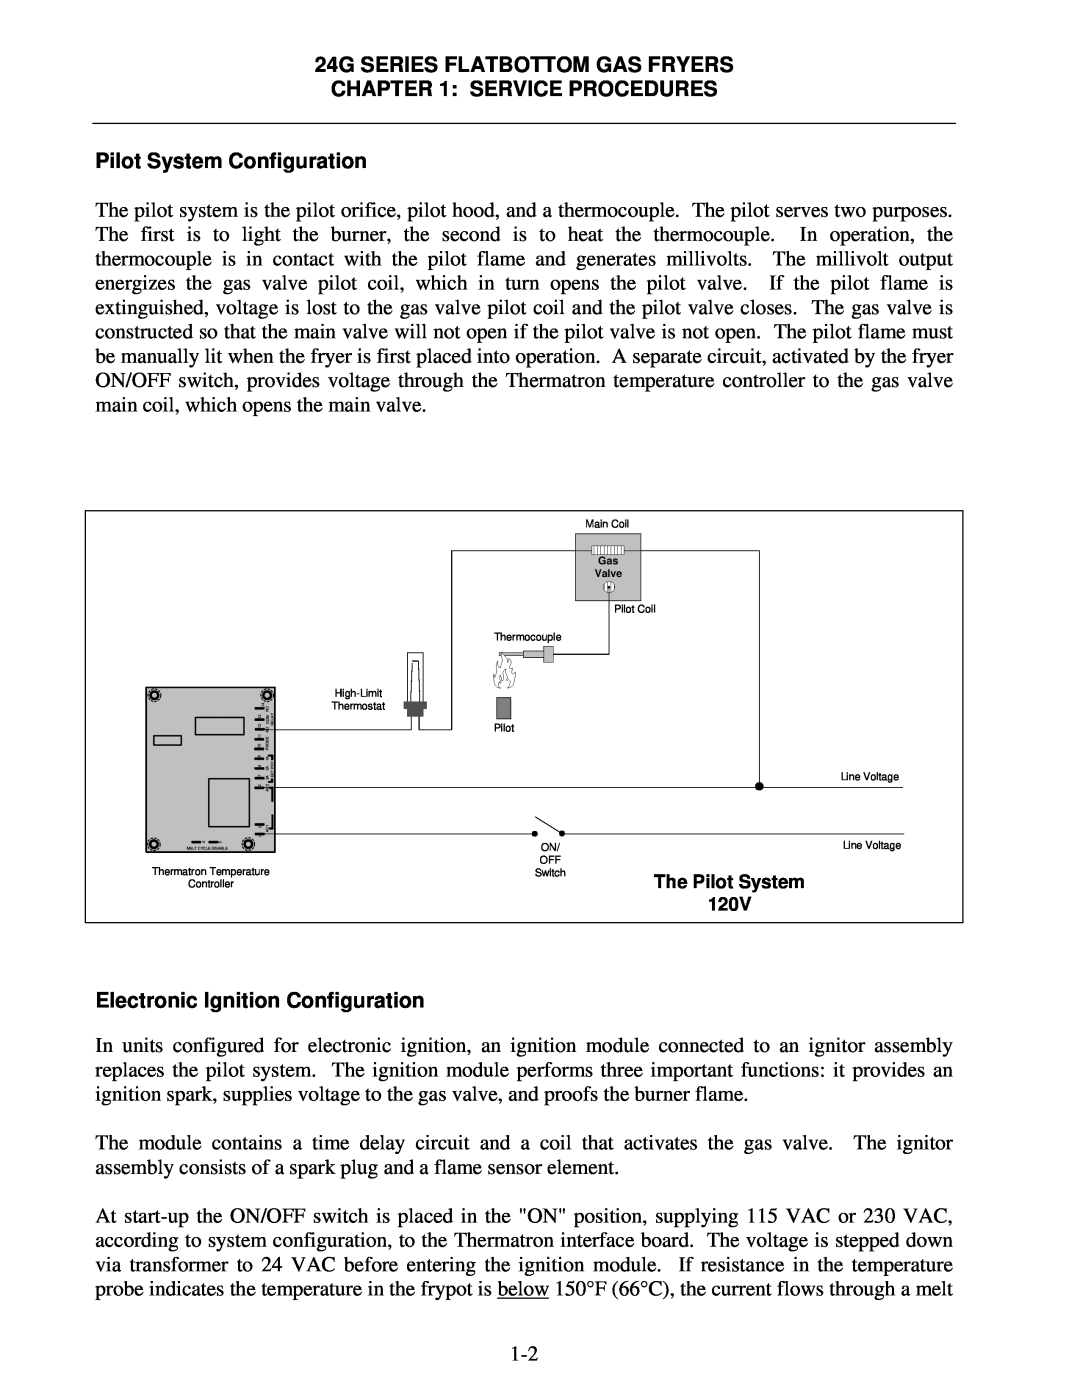 Frymaster 1824/2424G manual 24G SERIES FLATBOTTOM GAS FRYERS SERVICE PROCEDURES, Pilot System Configuration 